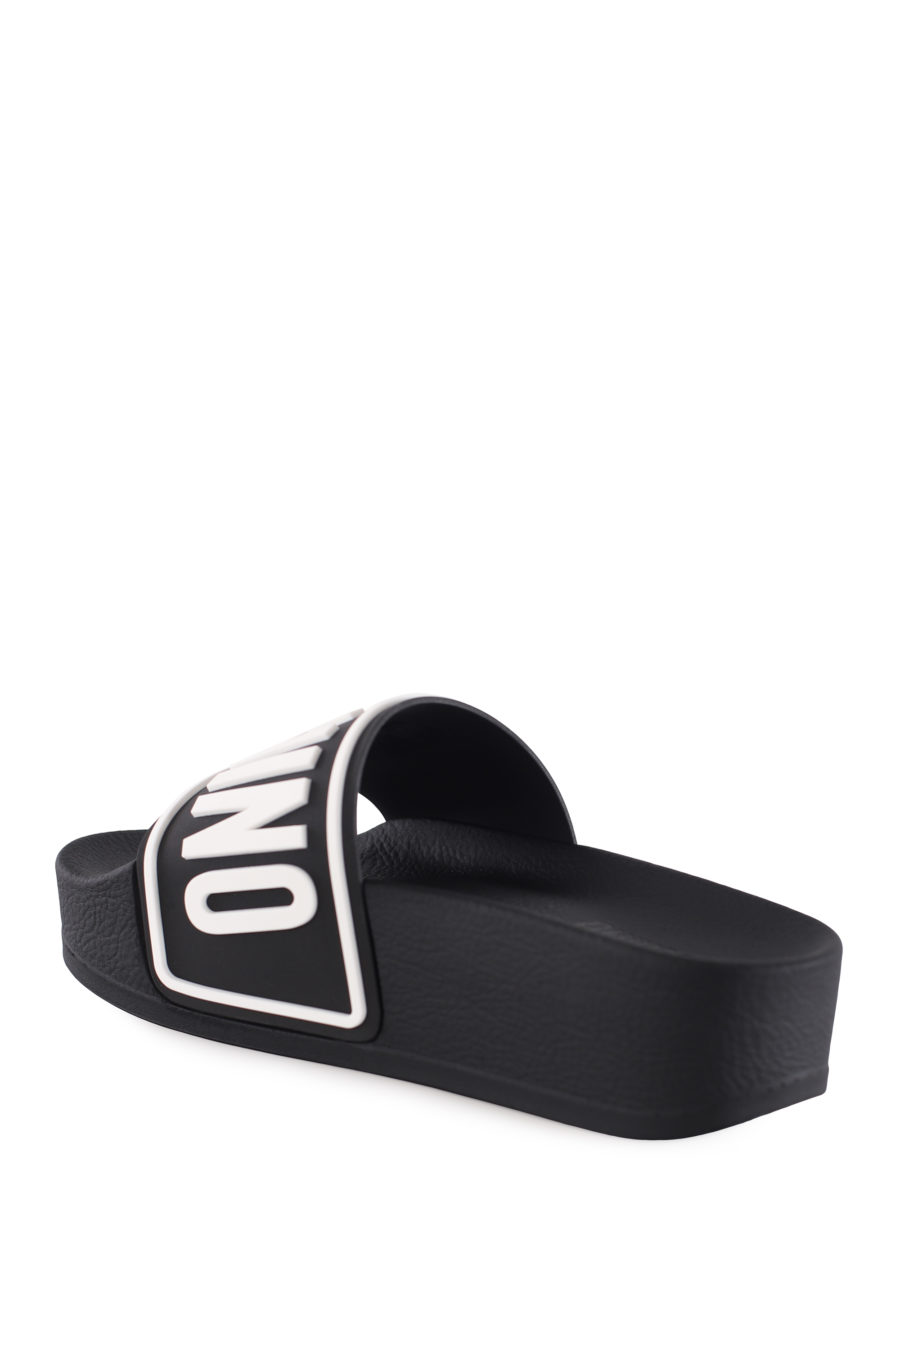 Black flip flops with white logo - IMG 7344